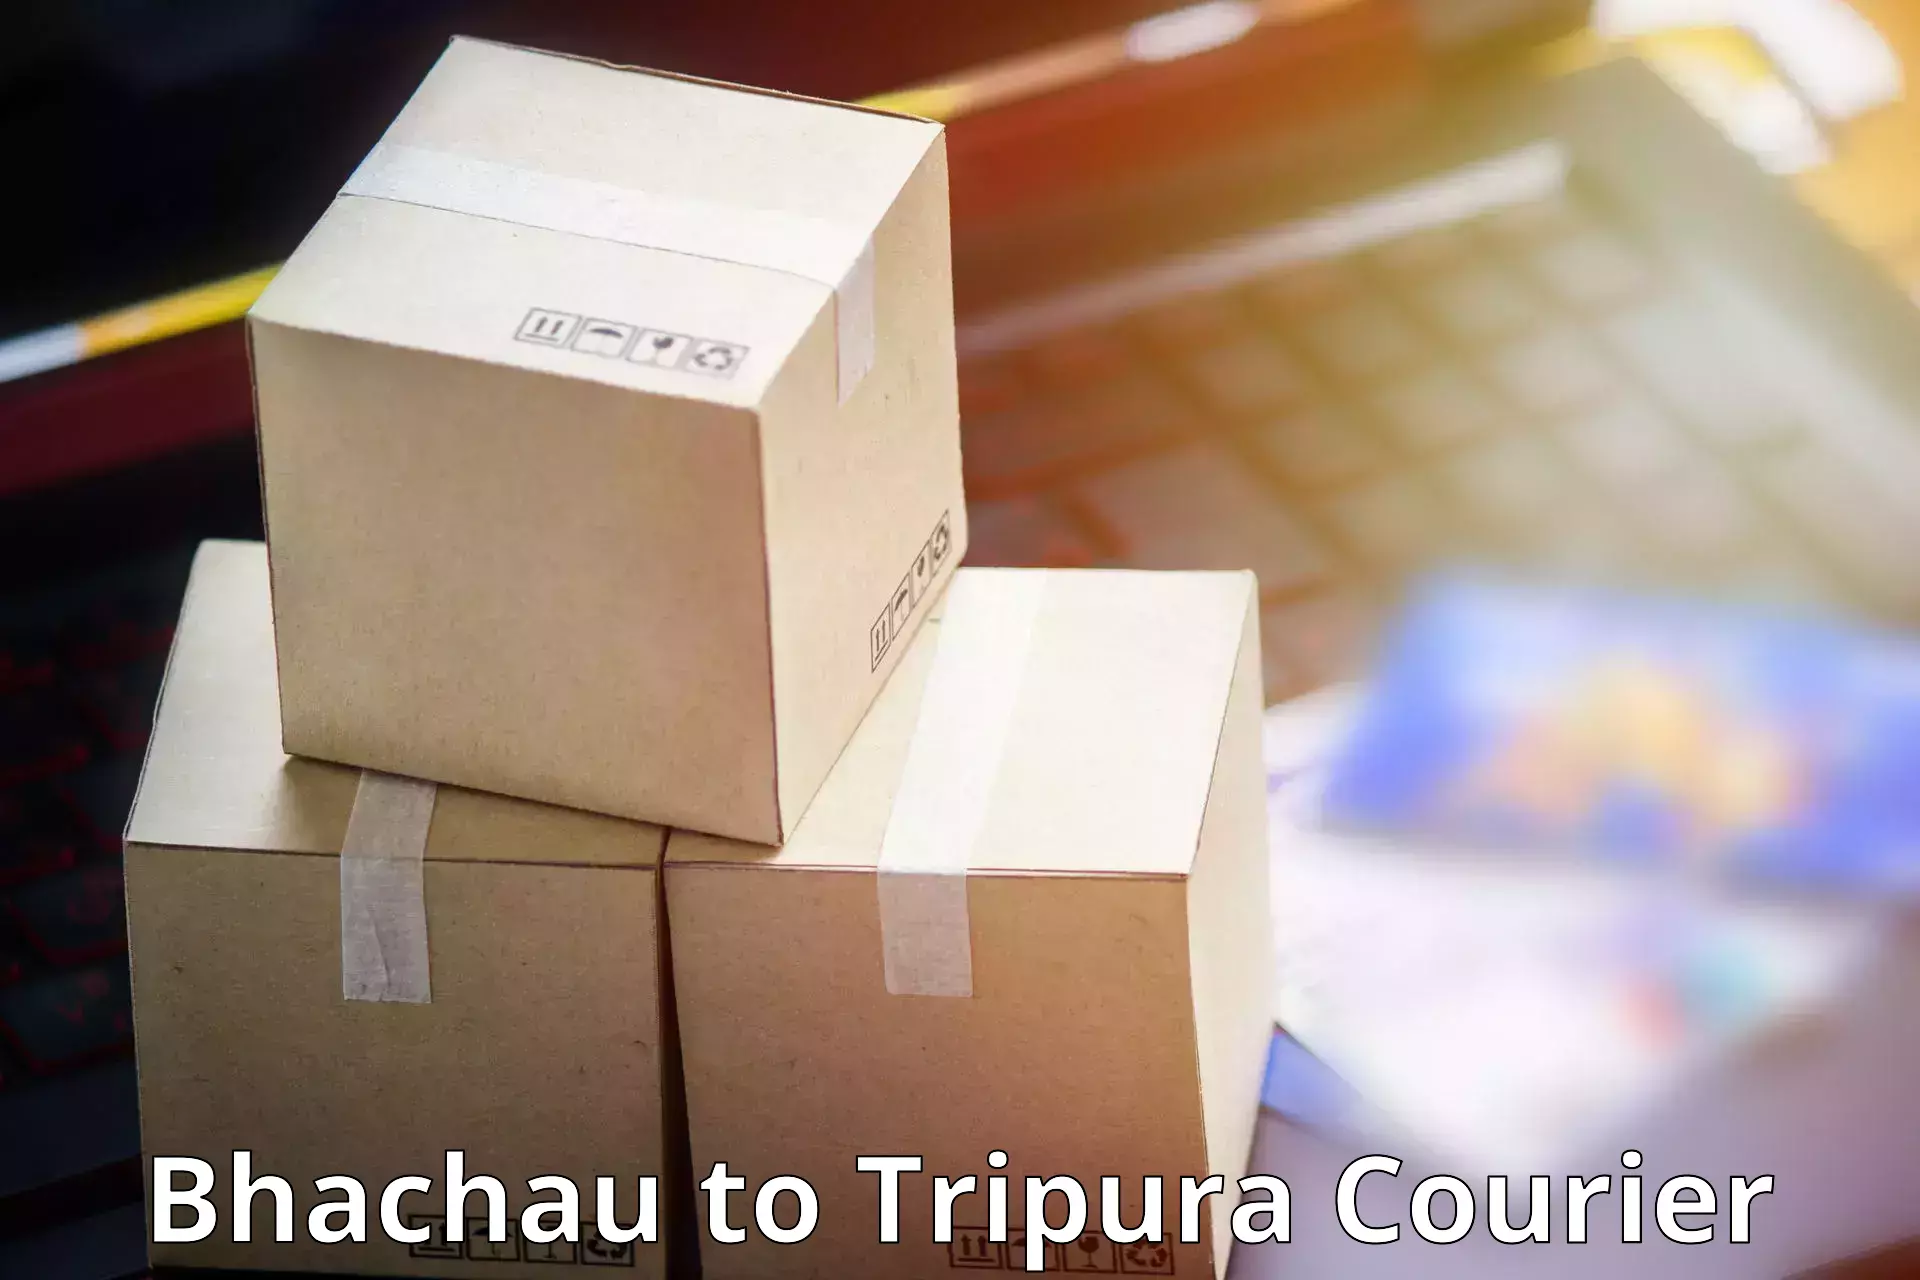 Automated parcel services Bhachau to Udaipur Tripura